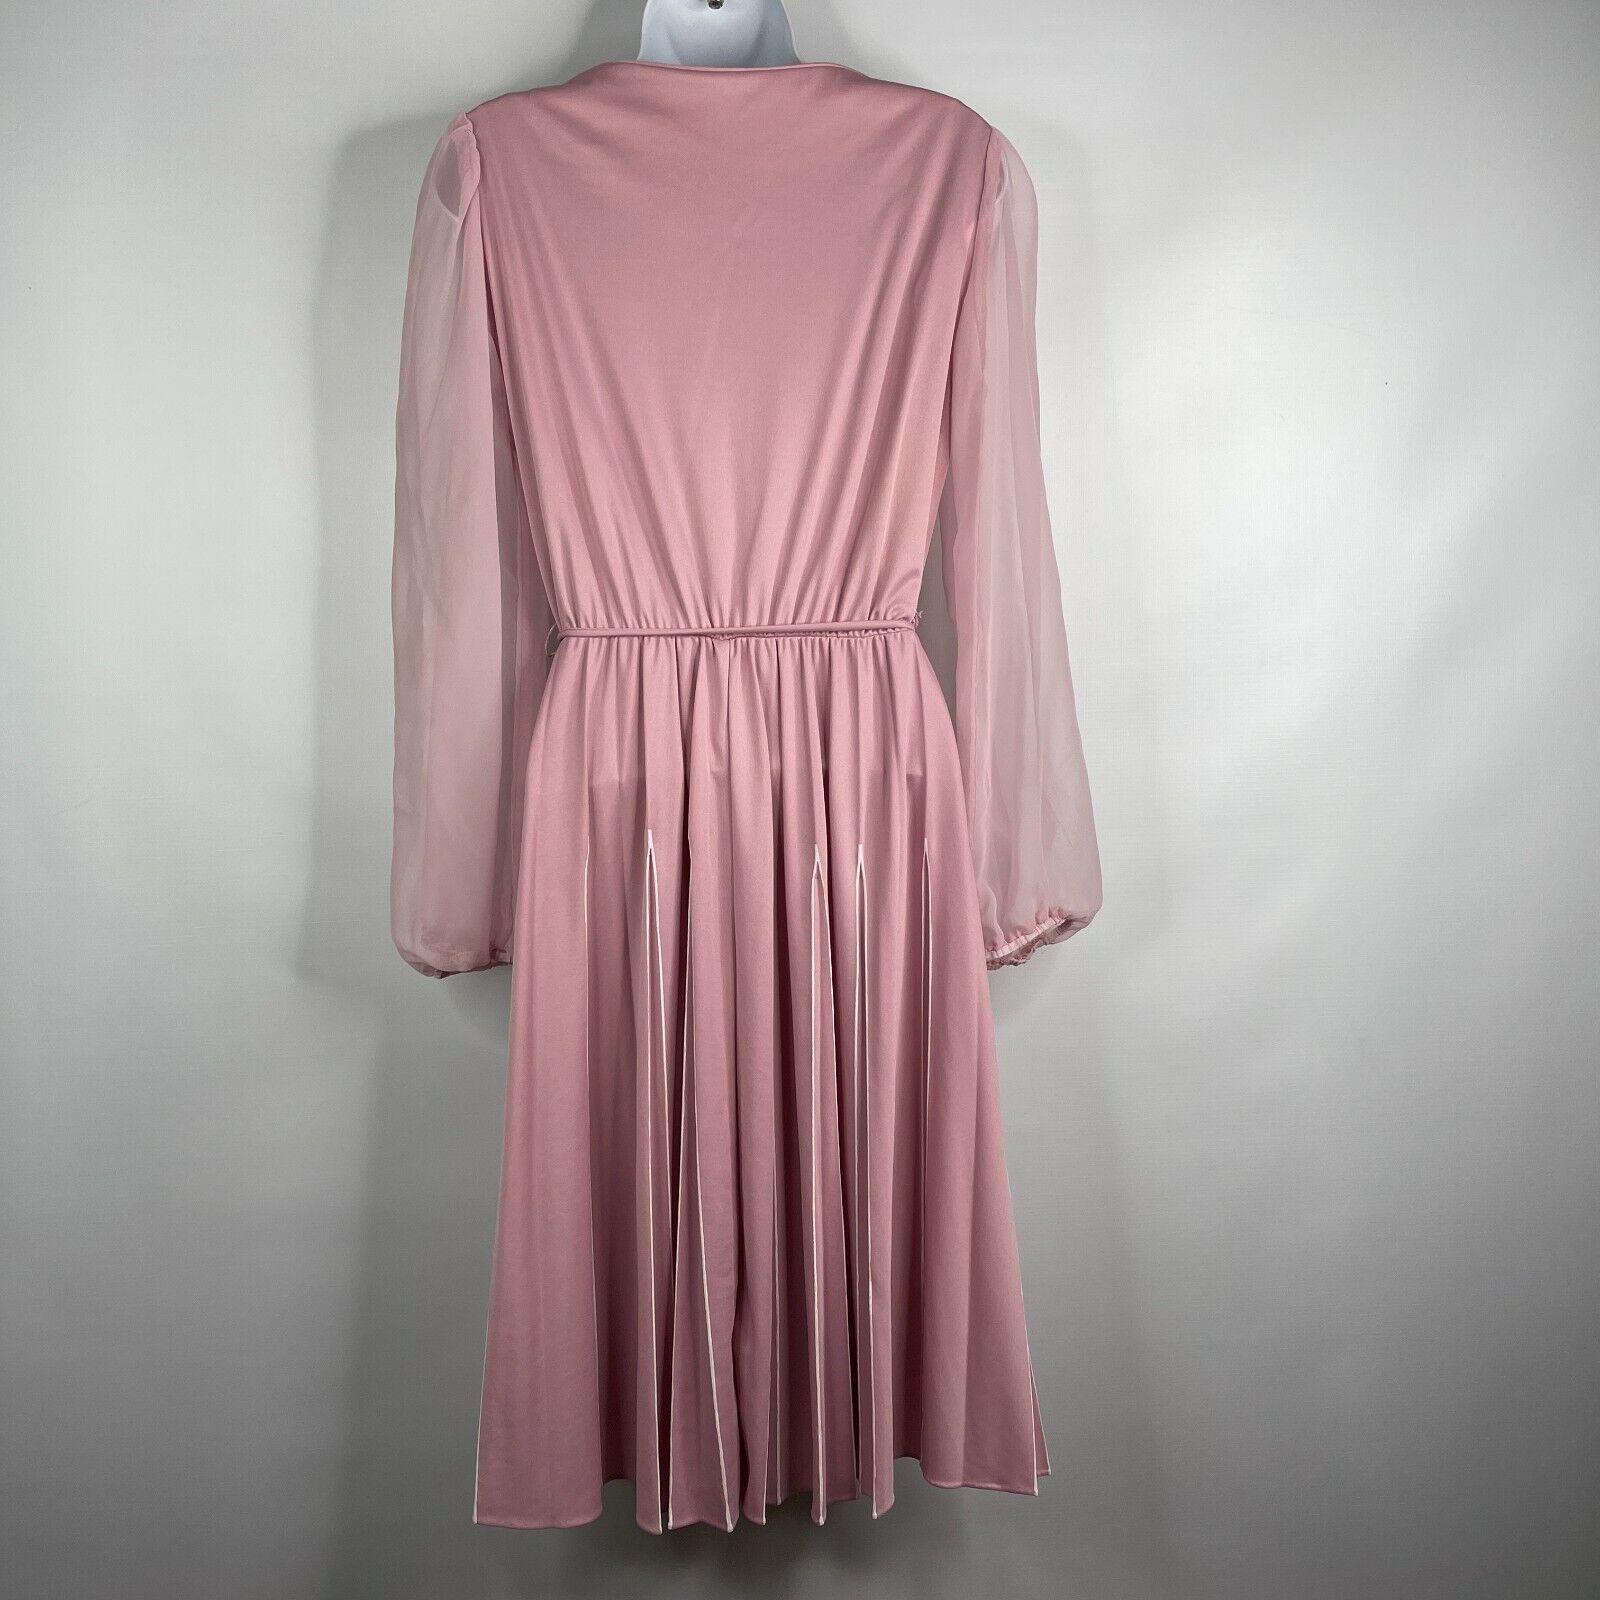 Vintage 70s Lavender Belted Contrast Stich Pleat Fit Flare Dress Size L / US 10 / IT 46 - 5 Thumbnail